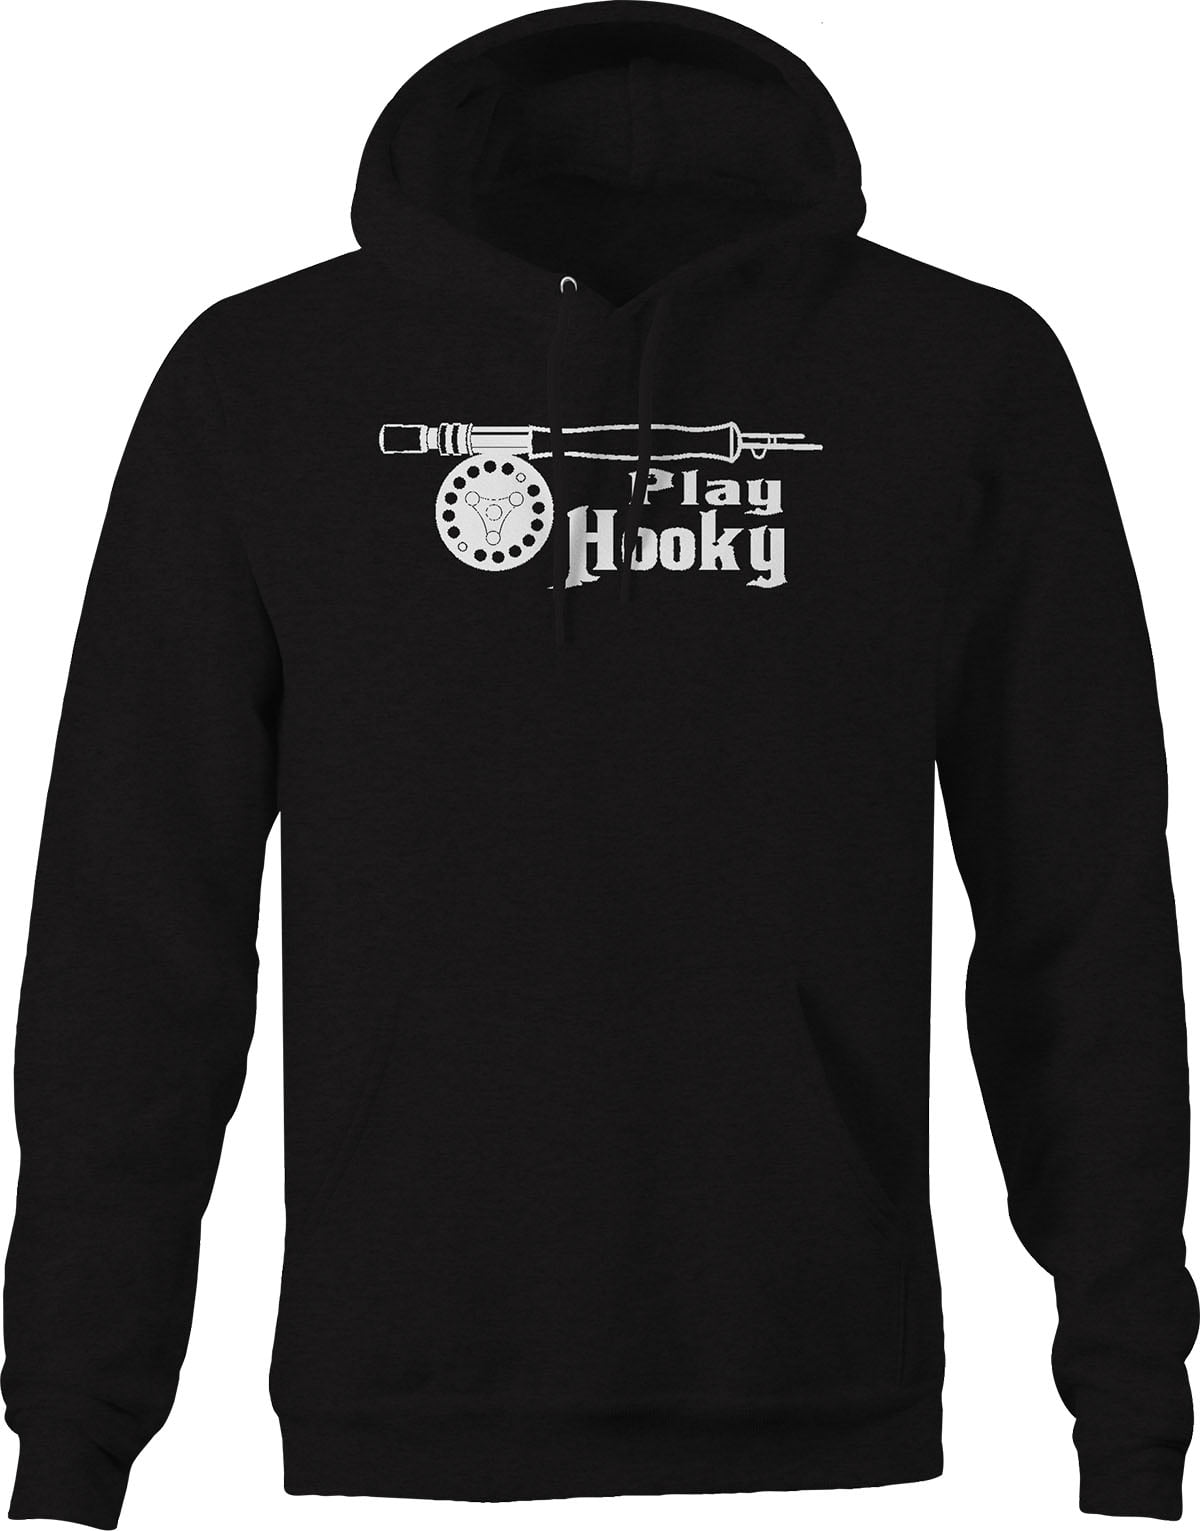 Play Hooky Funny Fishing Fleece Sweatshirt for Men 2XL Black